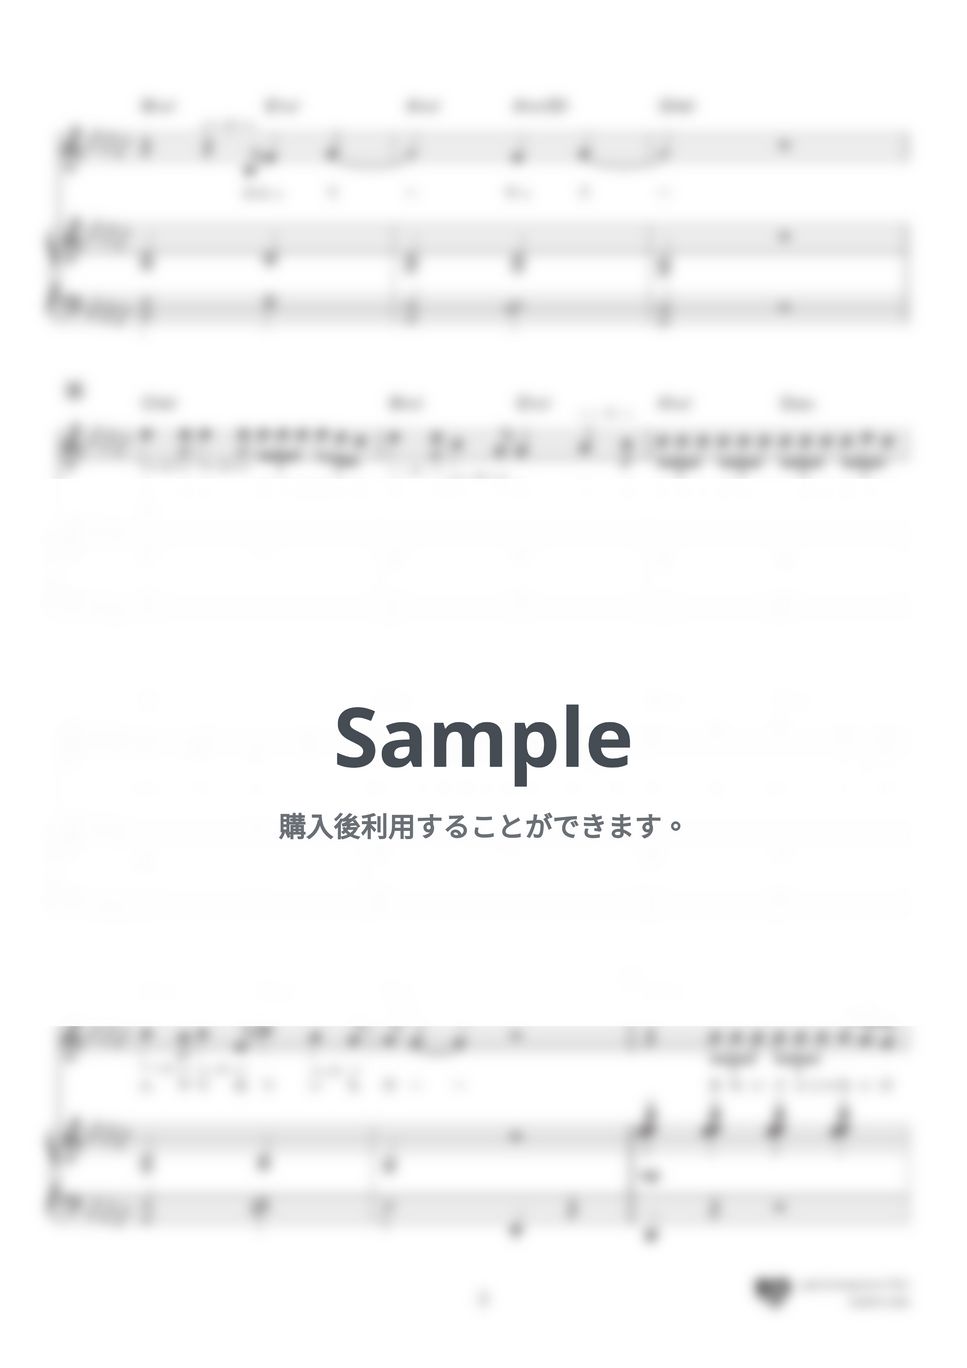 Official髭男dism - Subtitle (フジテレビドラマ『Silent』主題歌) by 楽譜仕事人_高橋美夕己